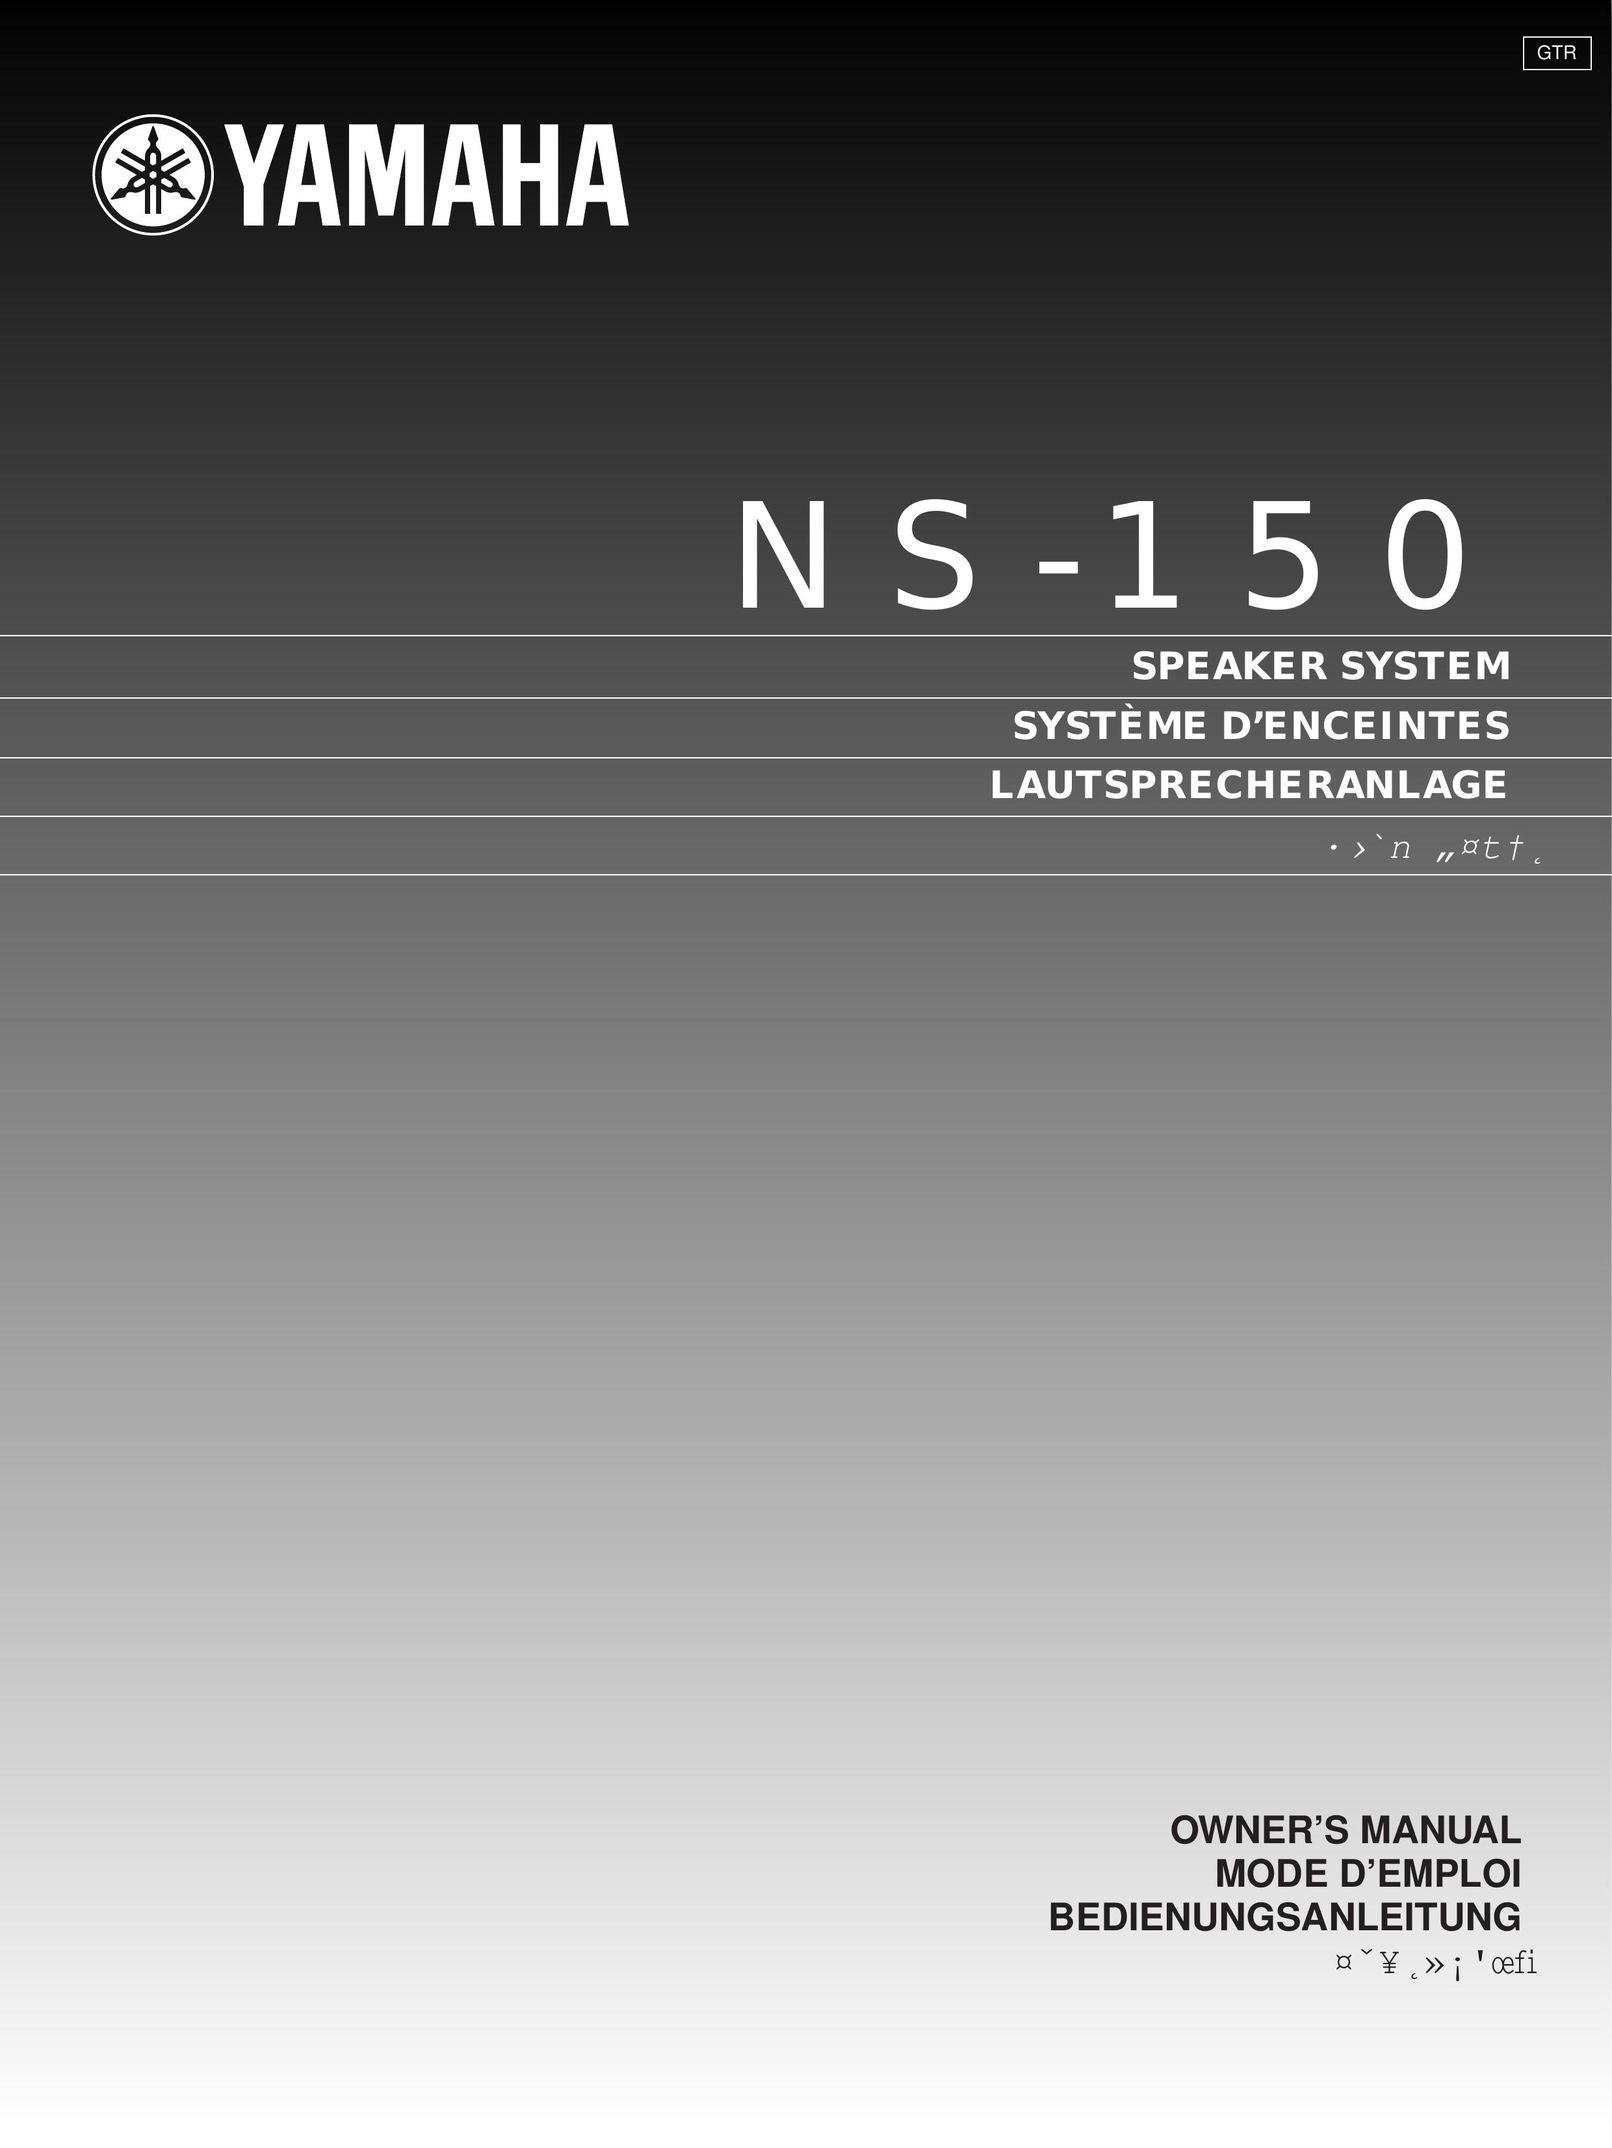 Yamaha NS-150 Speaker User Manual